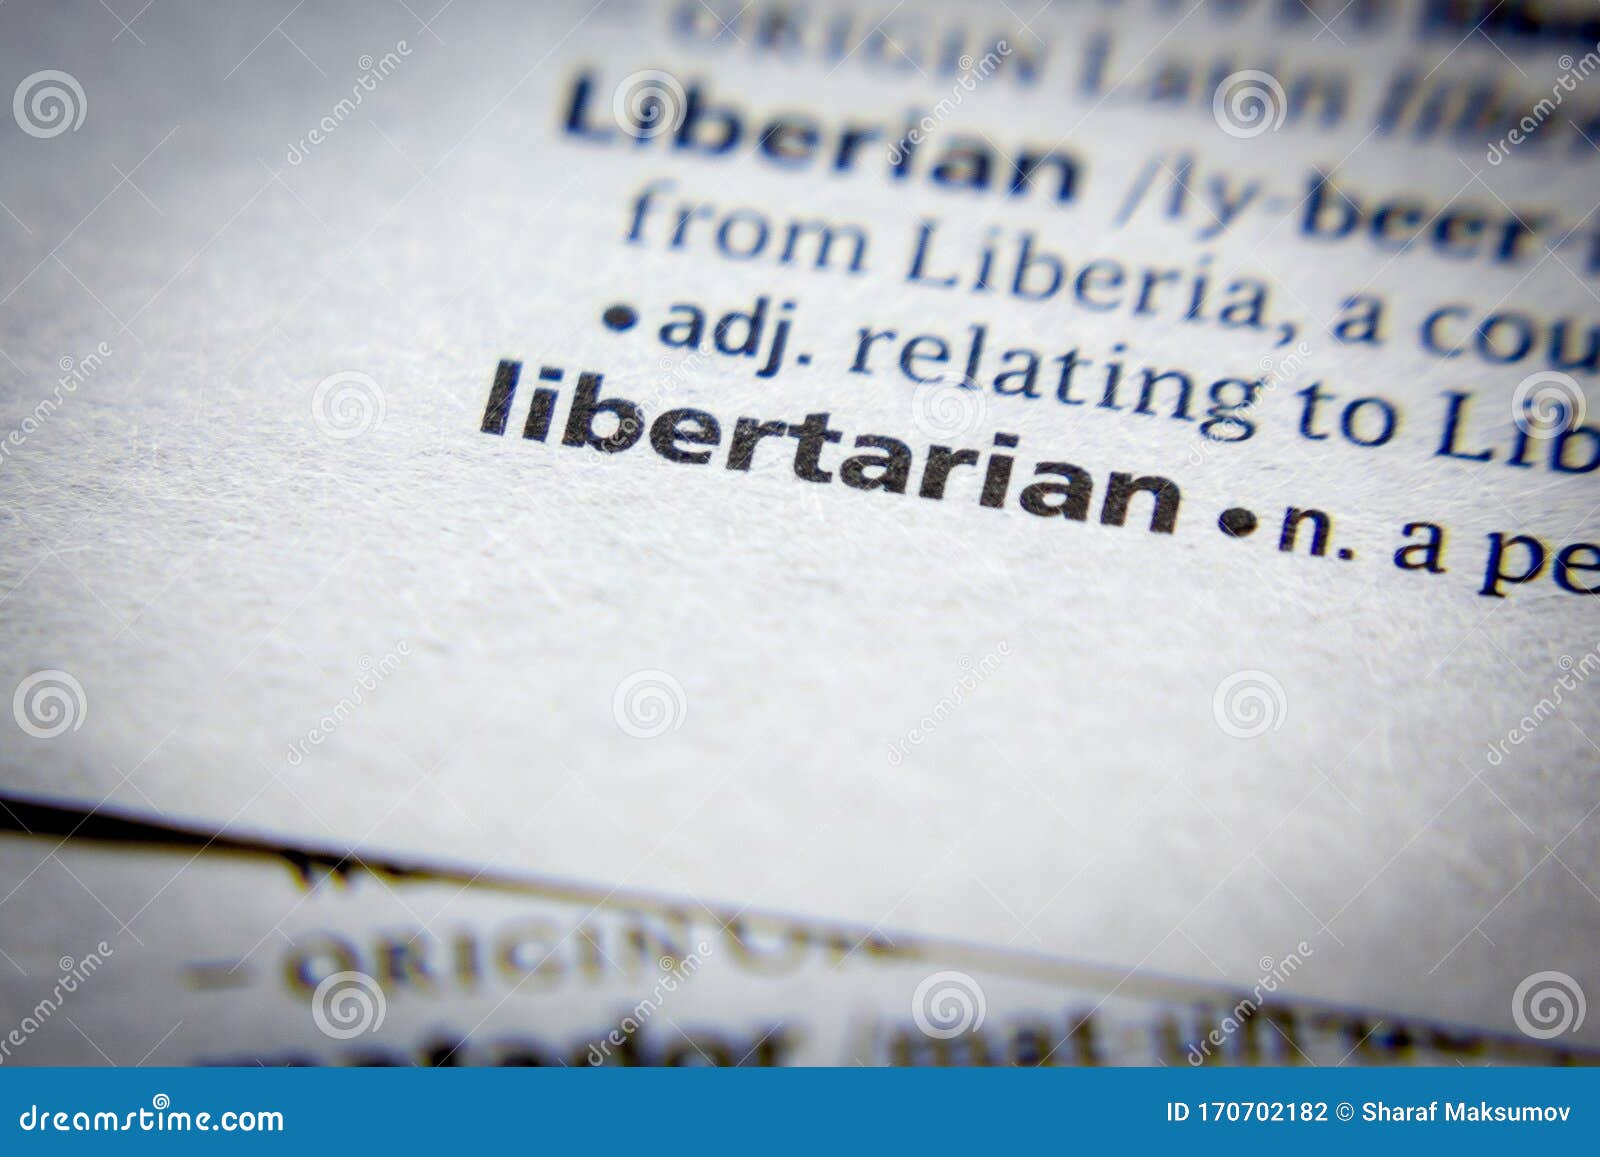 Libertarian meaning